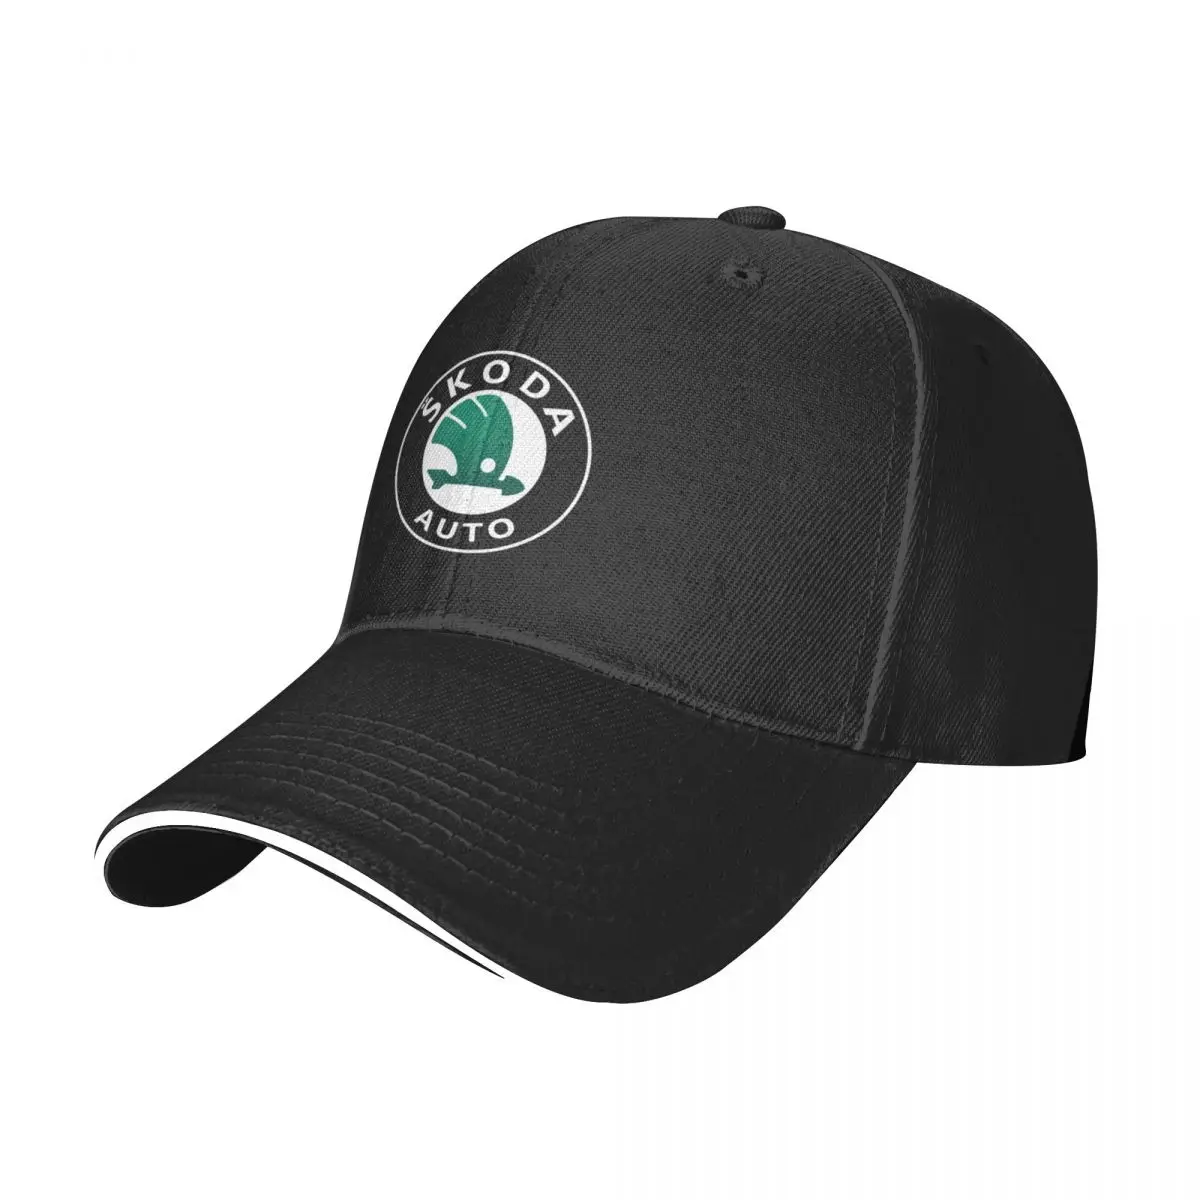 

New Sk-oda Cap Baseball Cap hats trucker hat golf hat men Women's hats for men